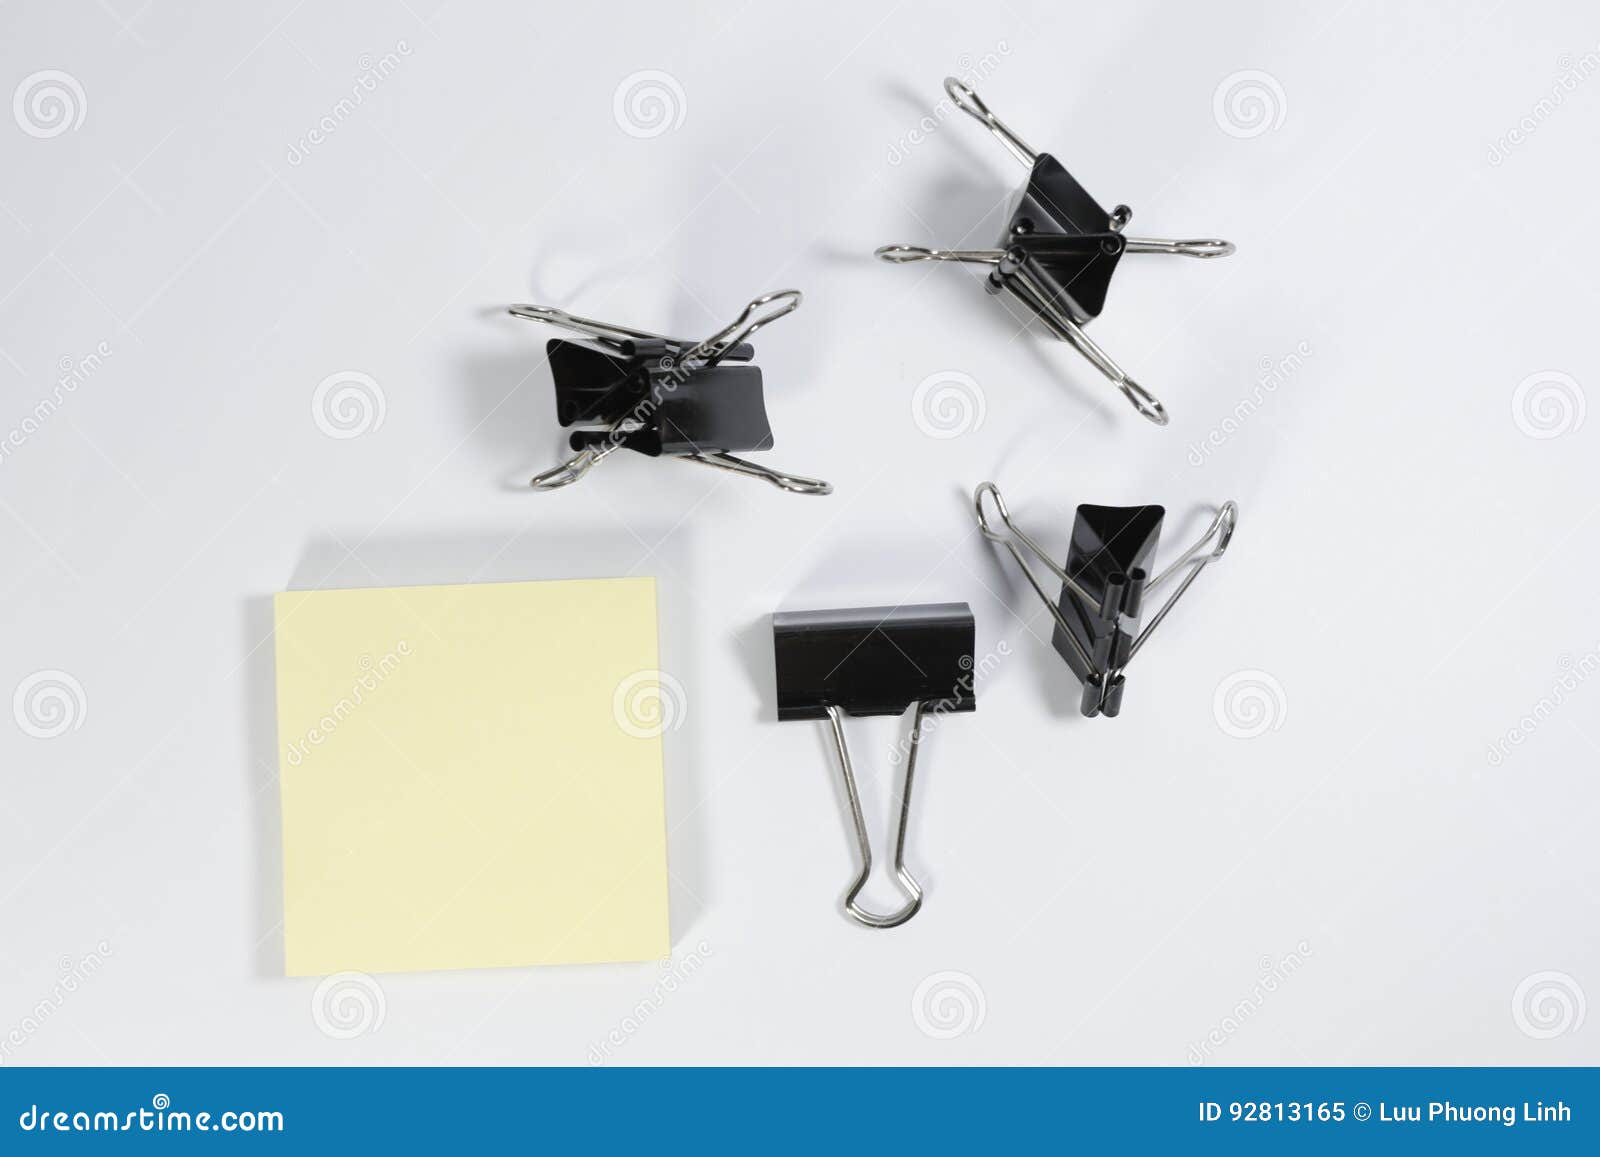 memopad and binder clips  on white background